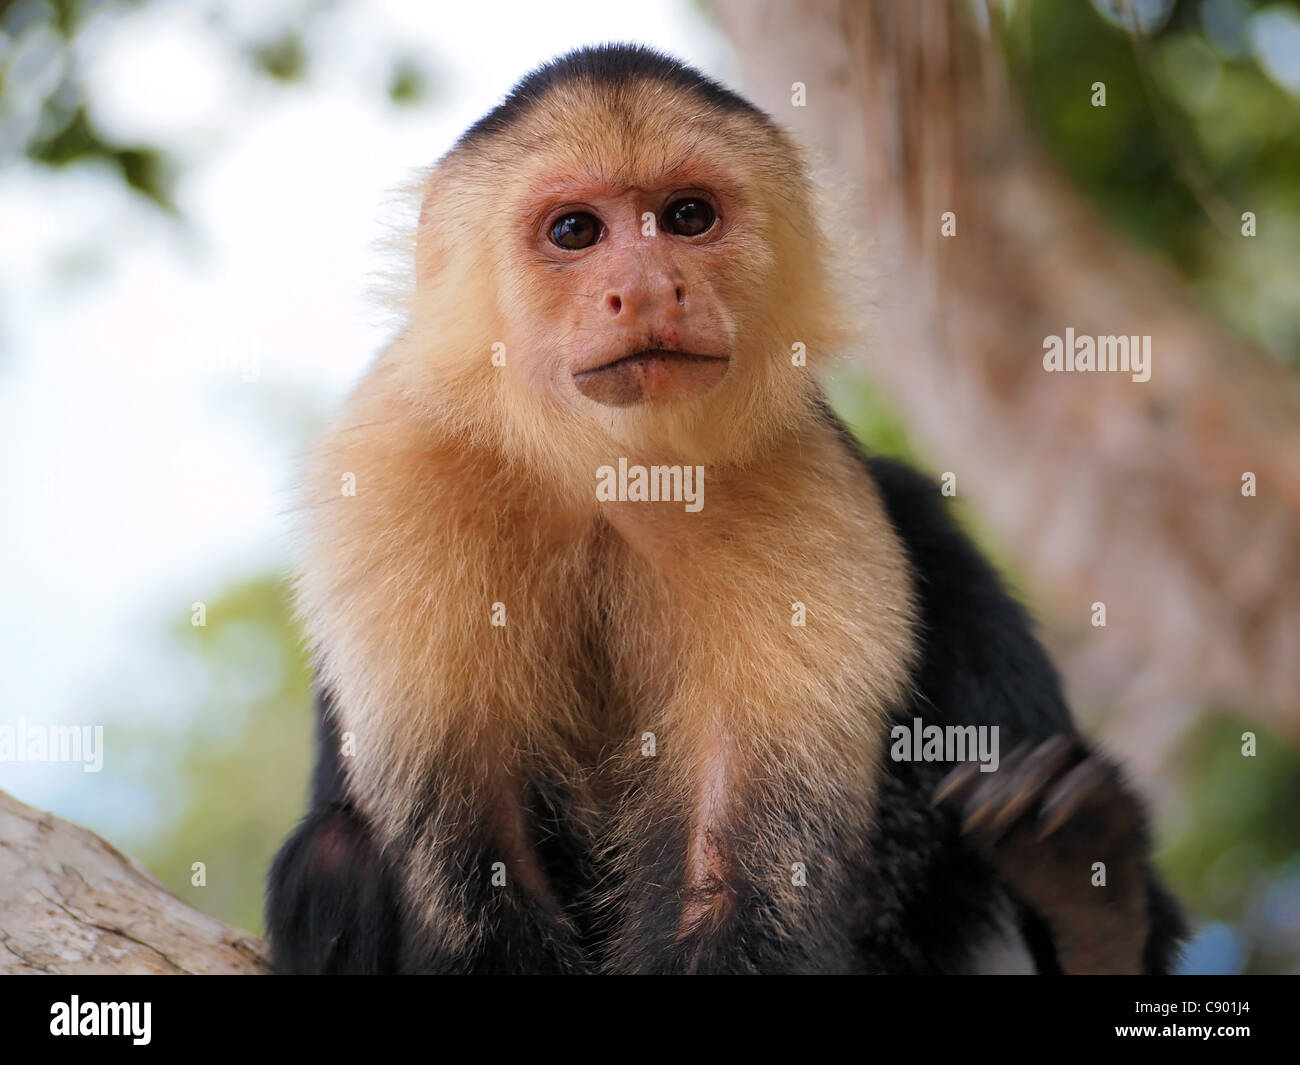 Head of White-faced capuchin monkey, national park of Cahuita, Caribbean, Costa Rica Stock Photo